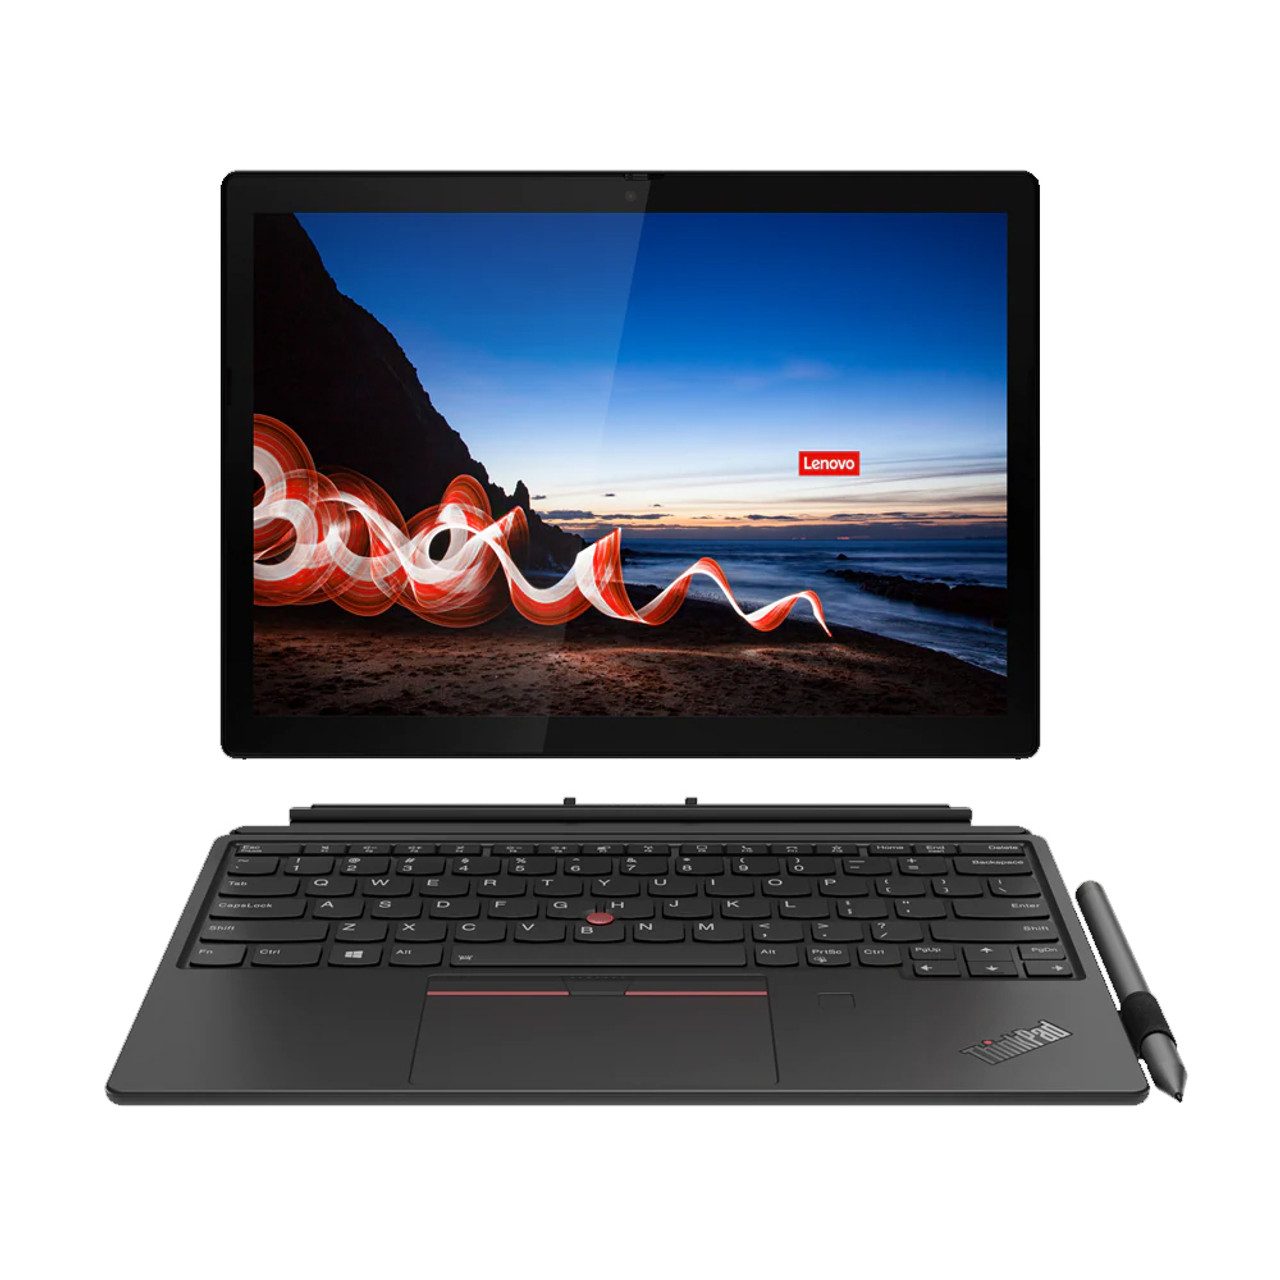 Lenovo ThinkPad X12 Detachable 12.3" Touch Laptop i5-1140G7 8GB 512GB SSD W10P | 20UW0014US | Manufacturer Refurbished